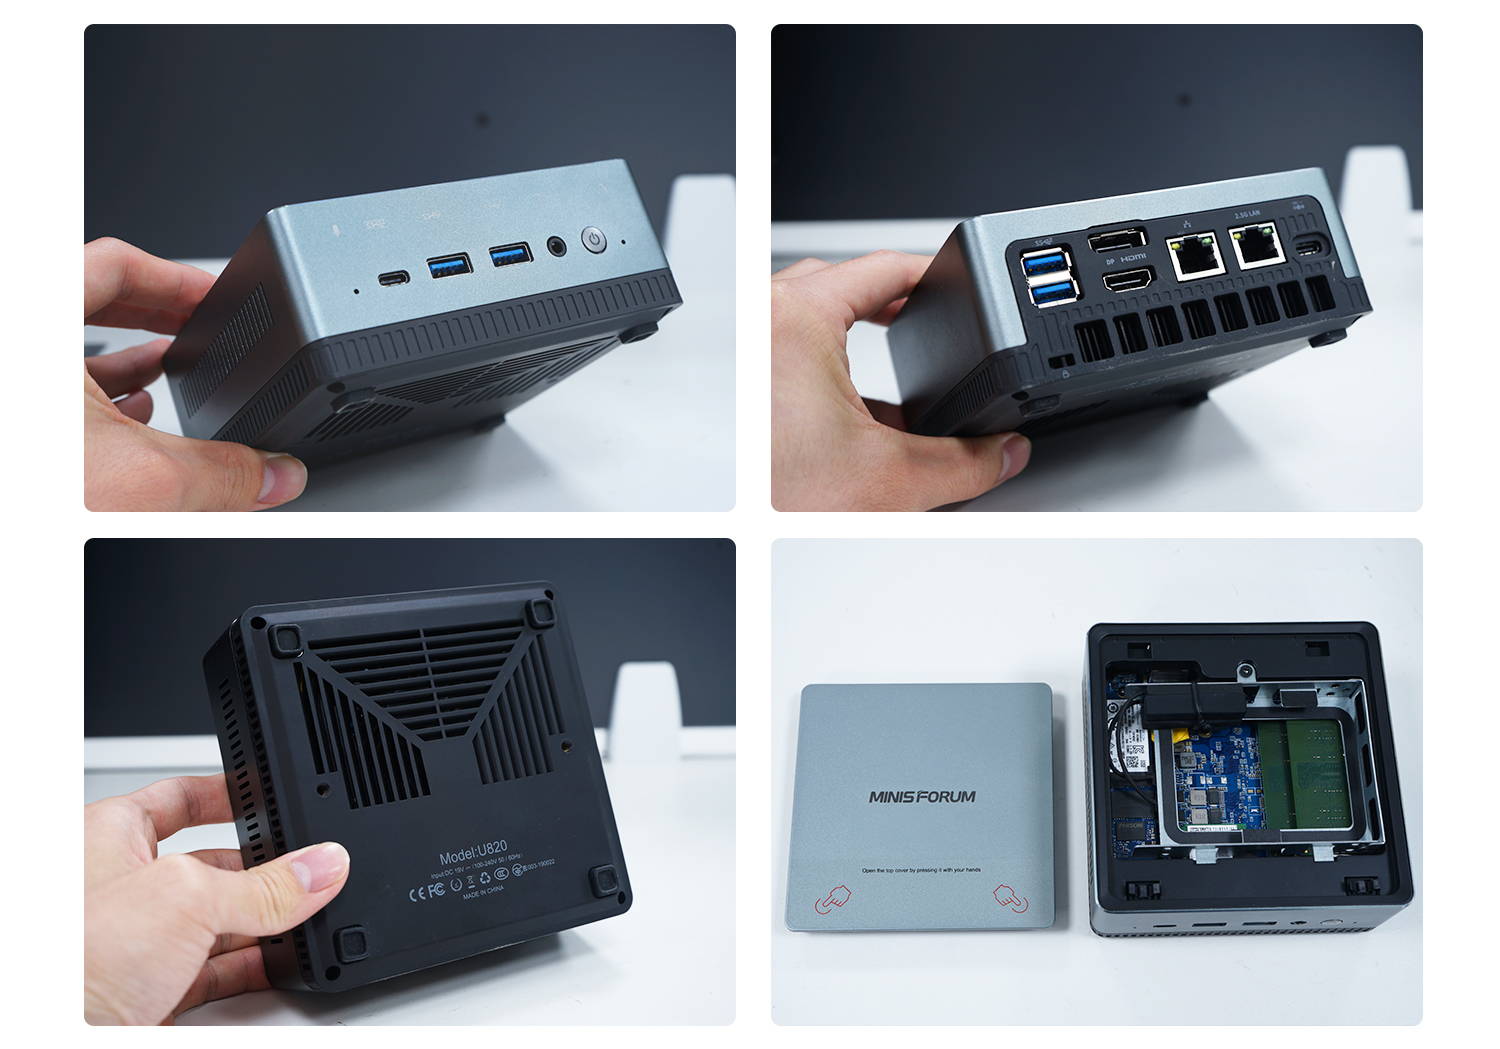 Etaprime on X: EliteMini UM700 Ryzen 7 Mini PC - Vega 10 Graphics In a  Small Package! #Ryzen #MiniPC #UM700 #APU #SFF    / X